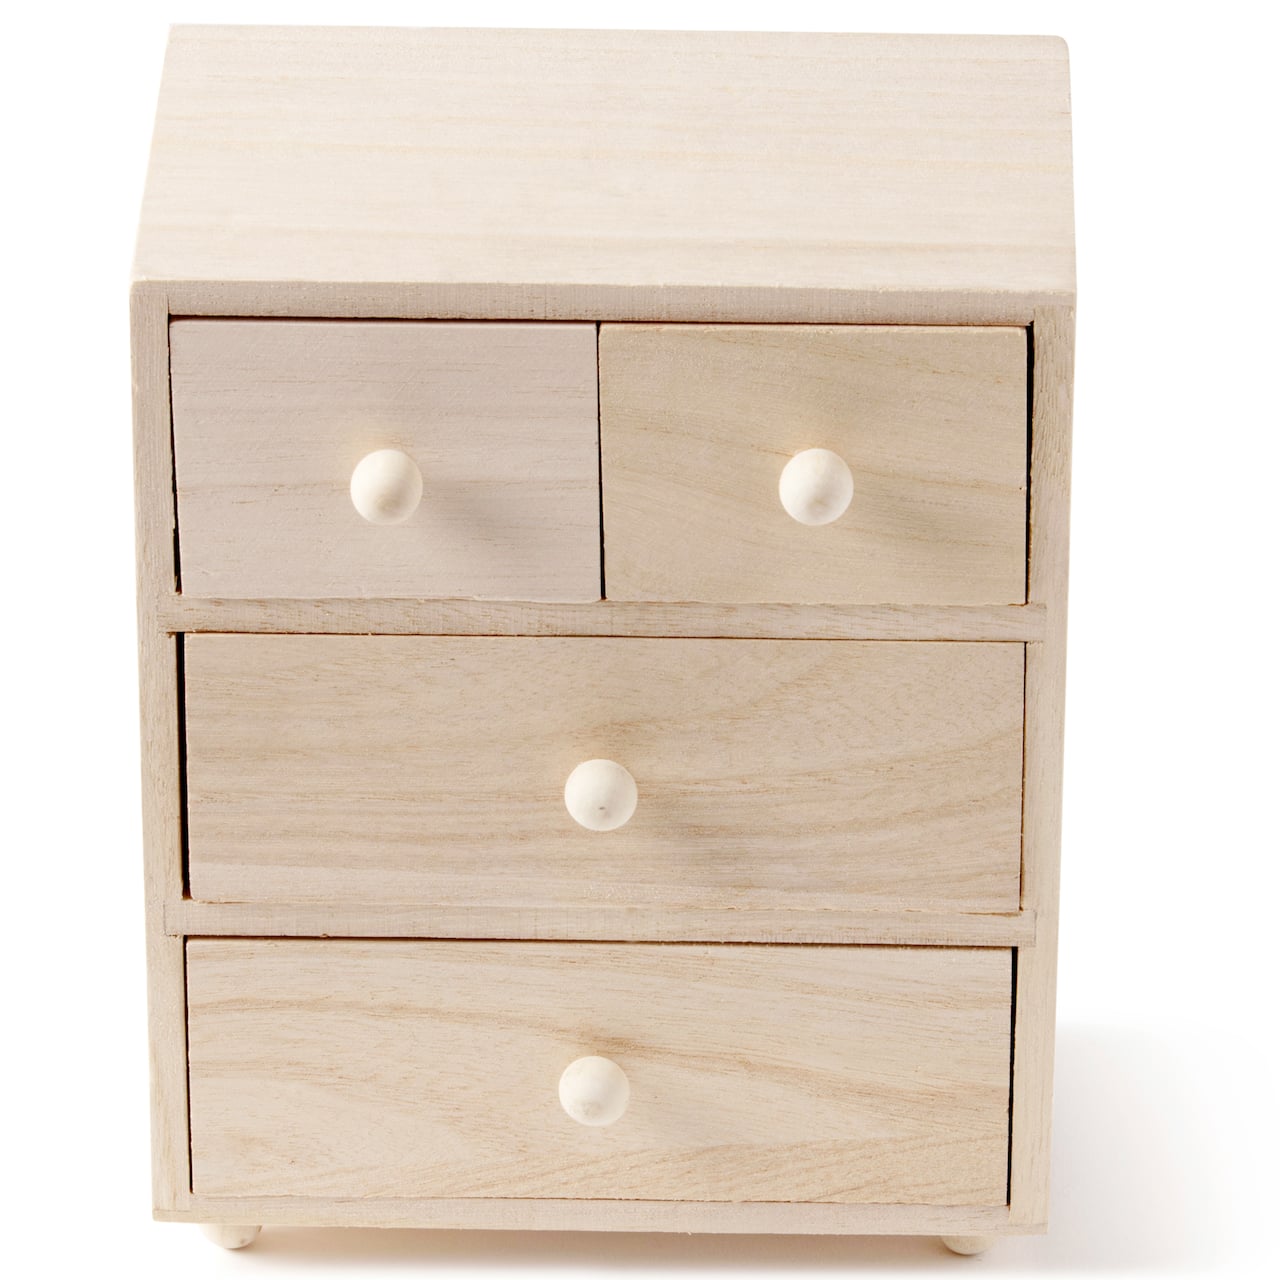 Wooden 4 Drawer Box by Make Market®